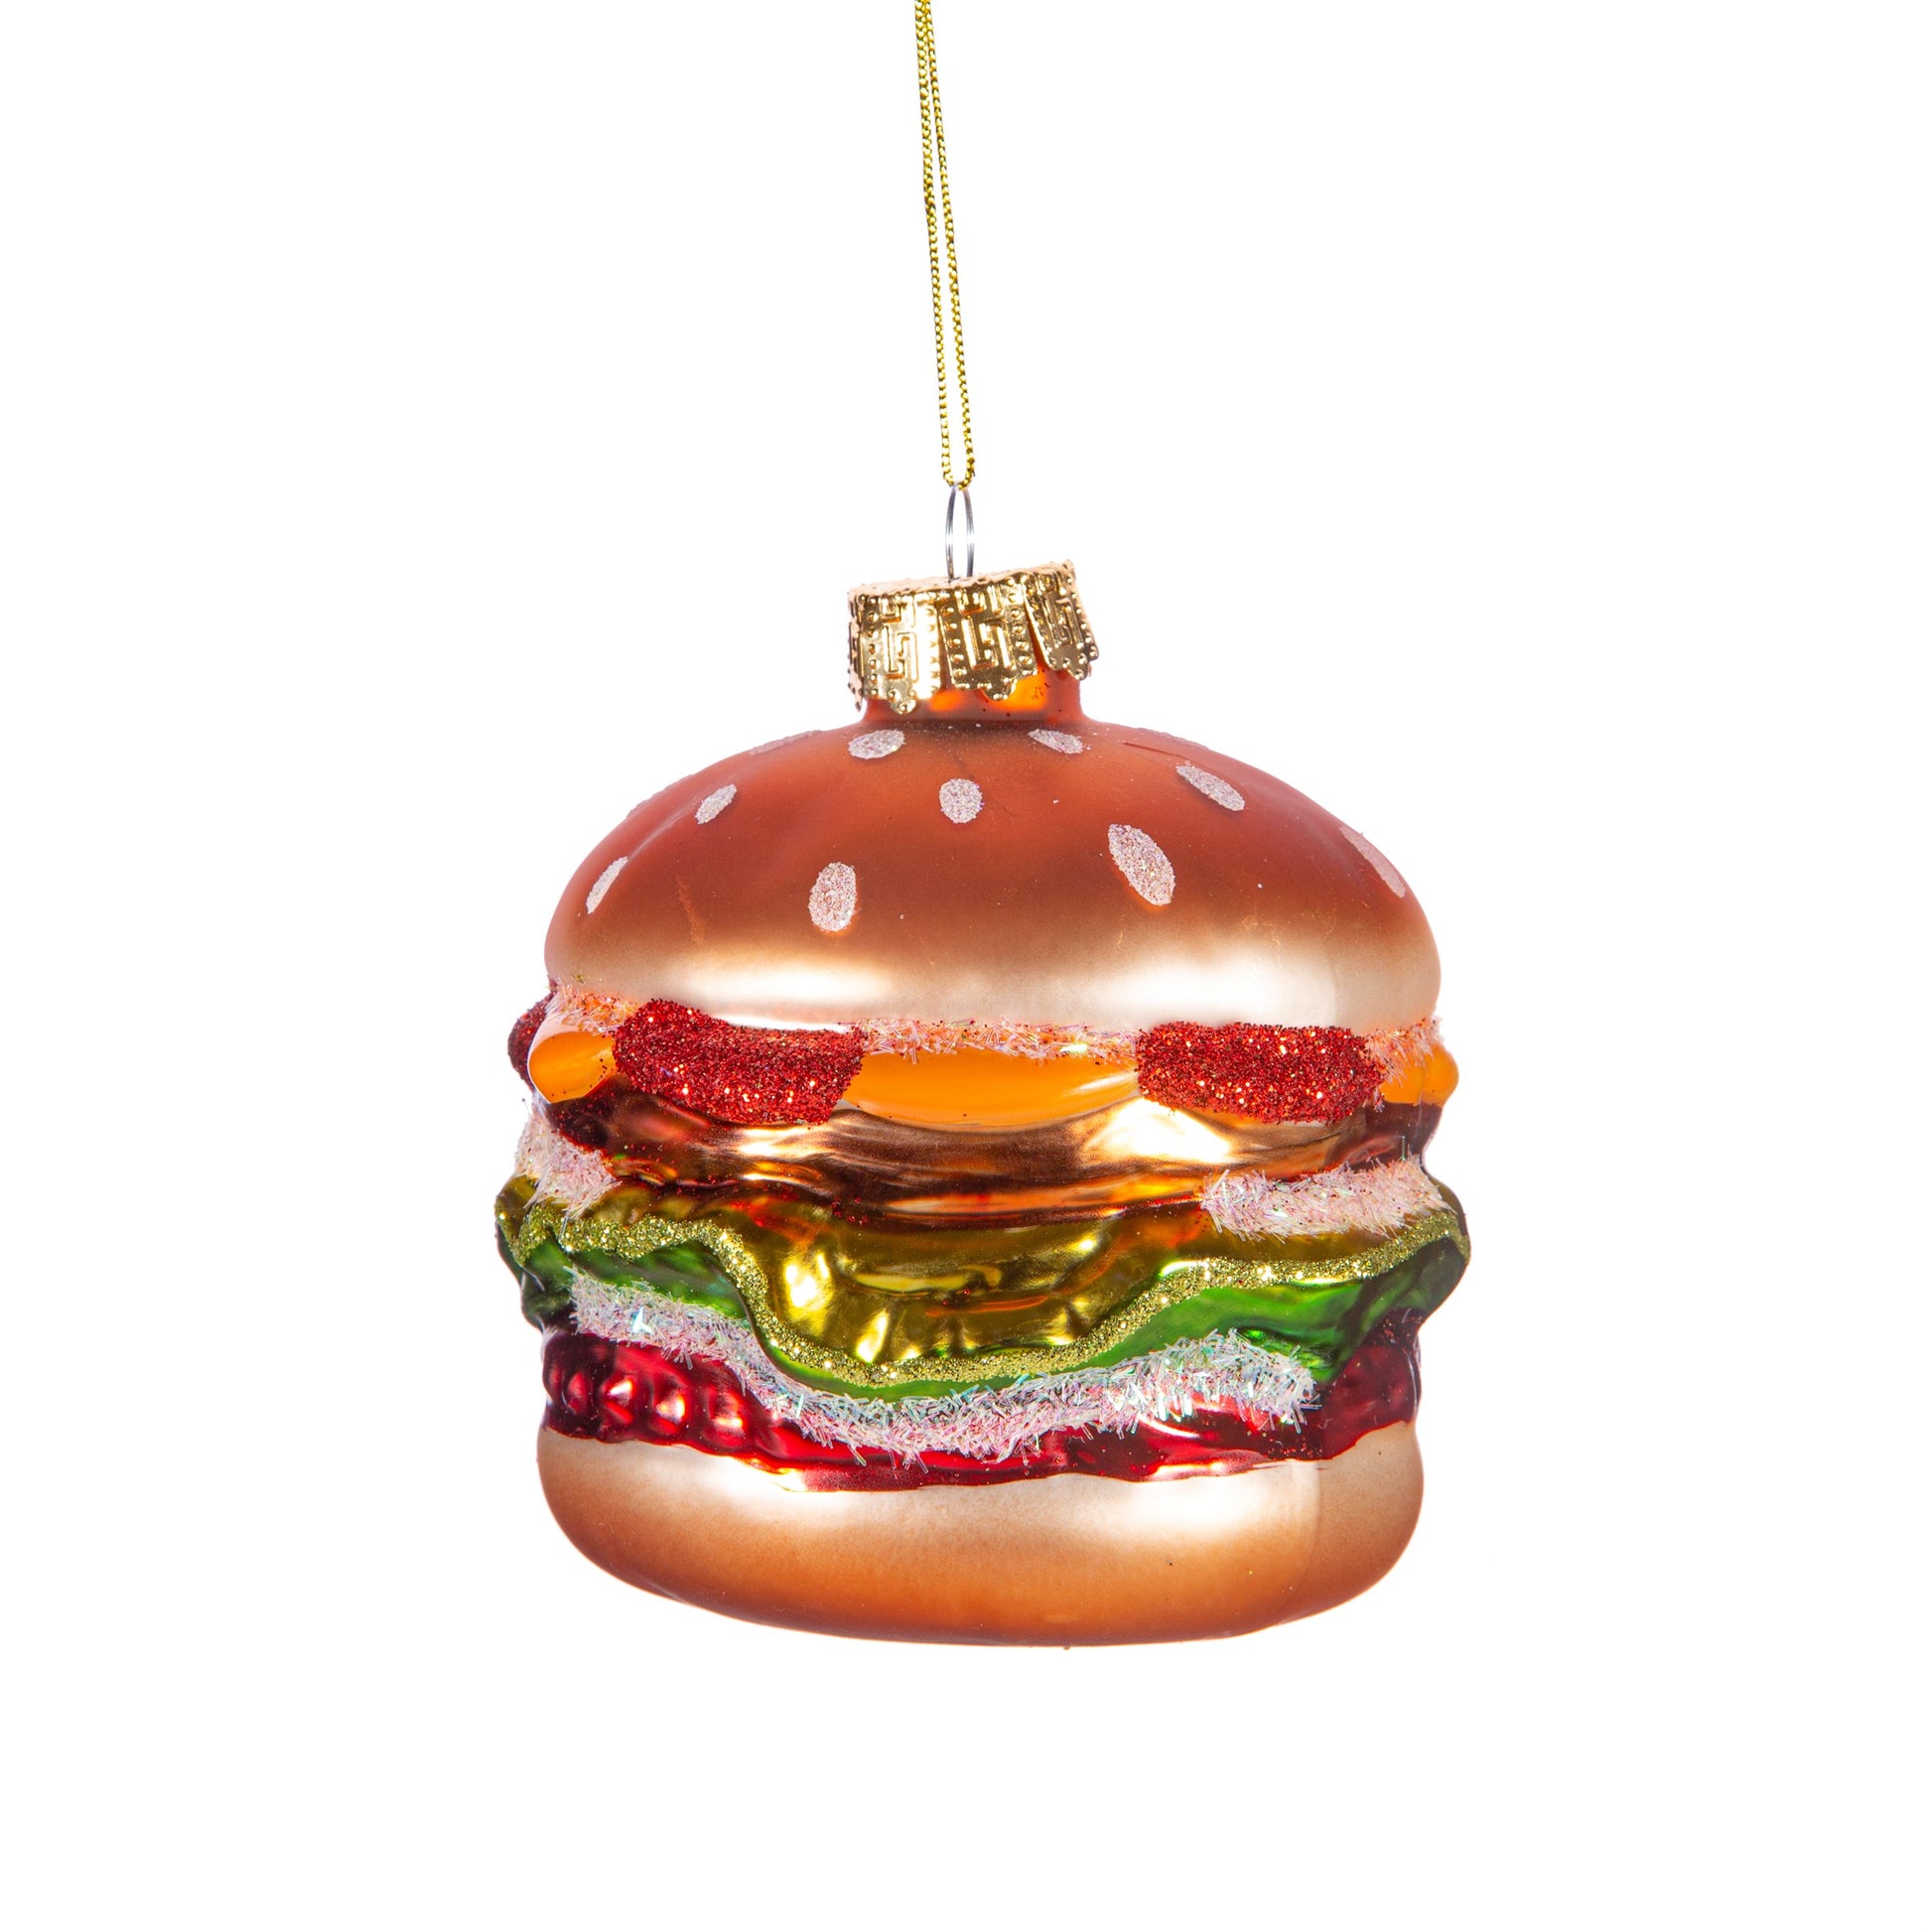 Juicy Burger Shaped Christmas Tree Bauble - ad&i